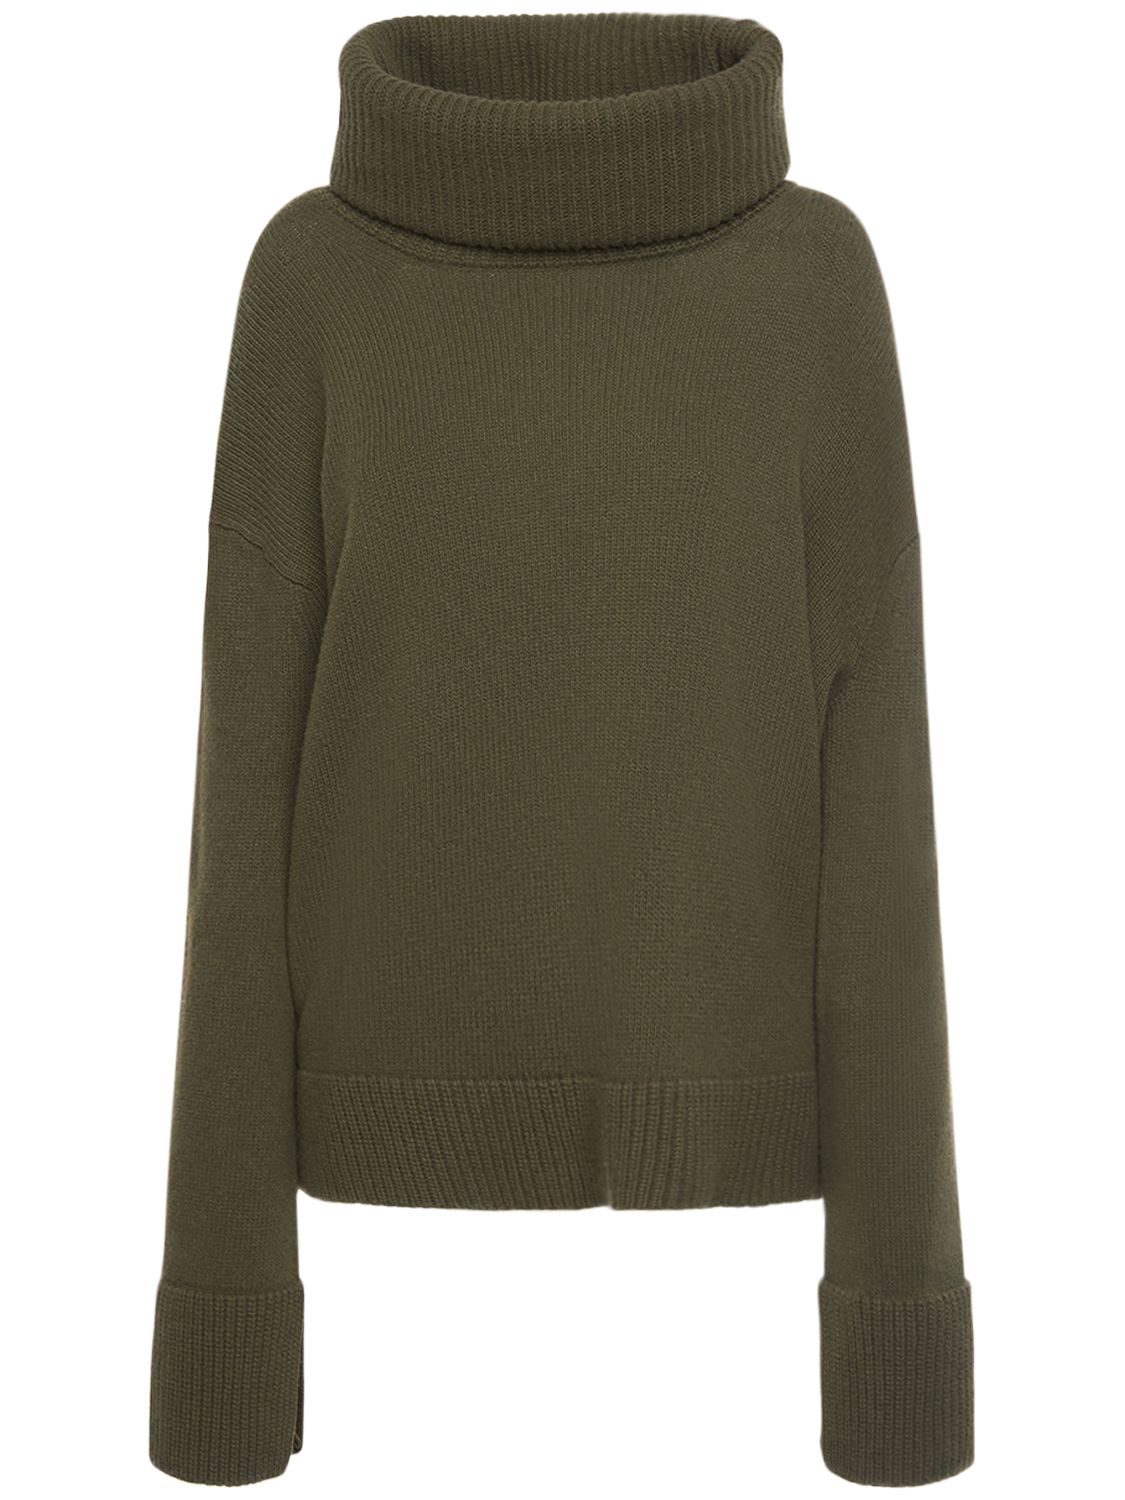 Tricot Wool Knit Turtleneck Sweater